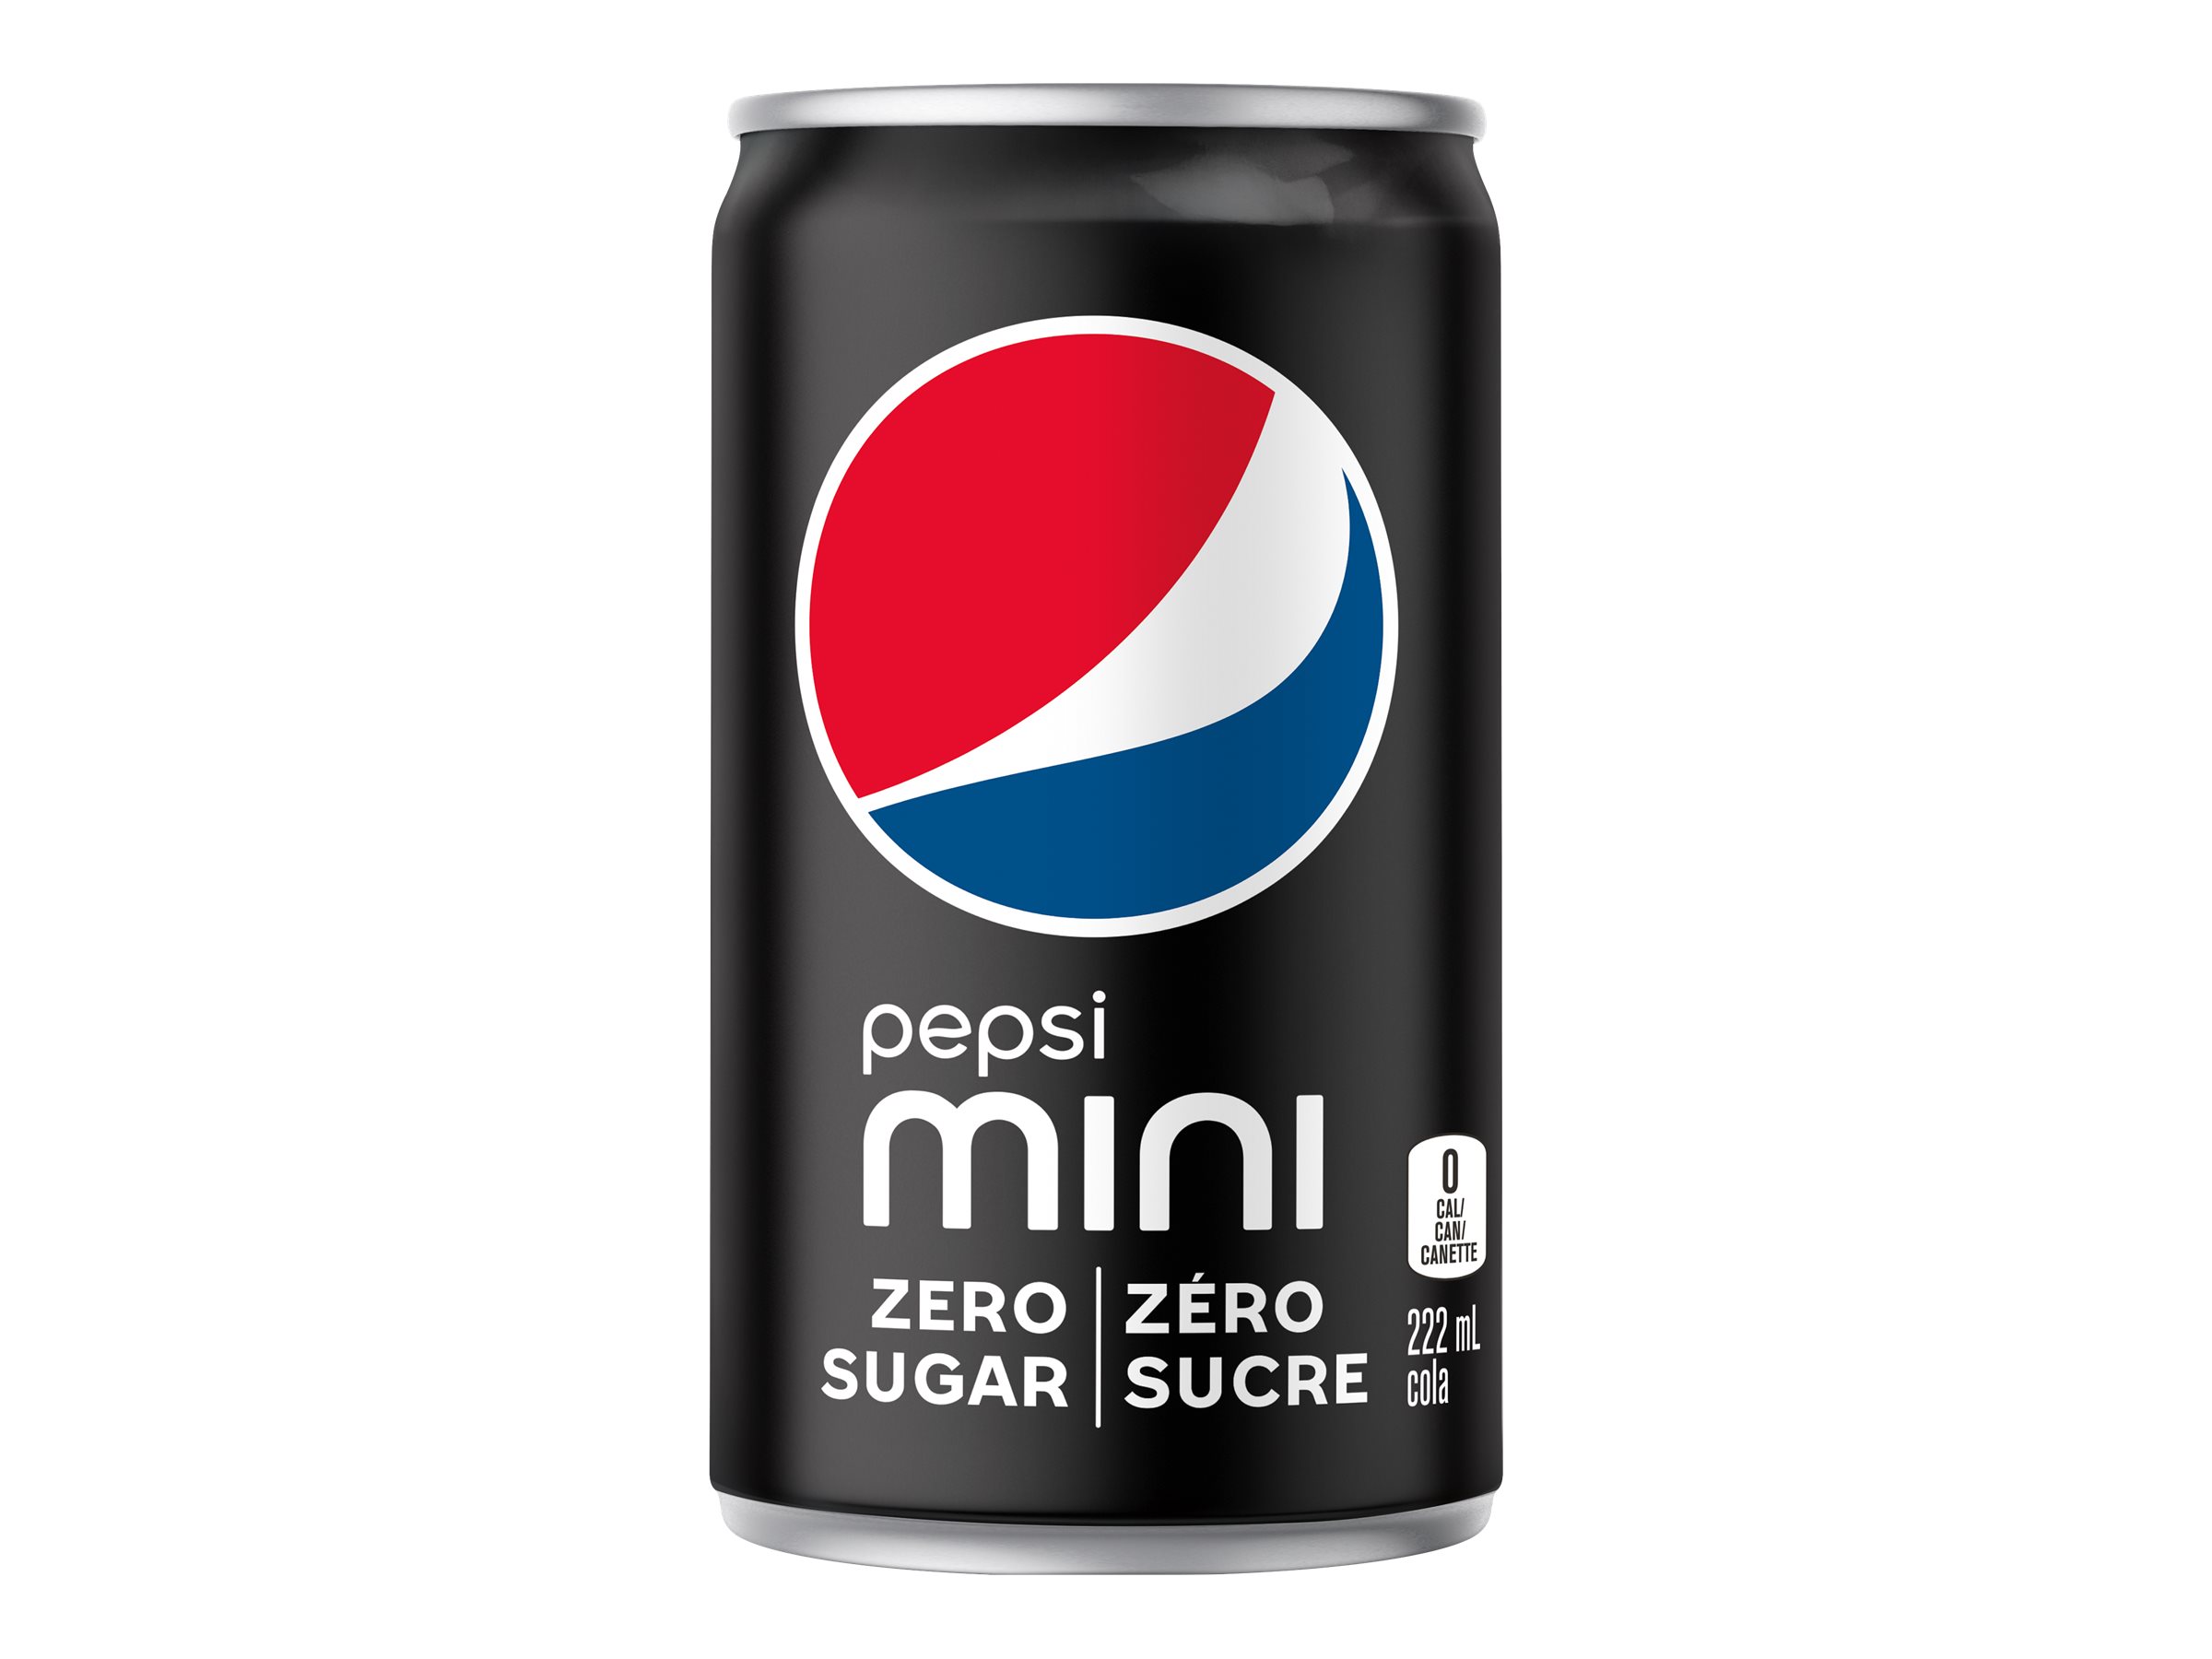 Pepsi Mini - Zero Sugar - 6x222ml